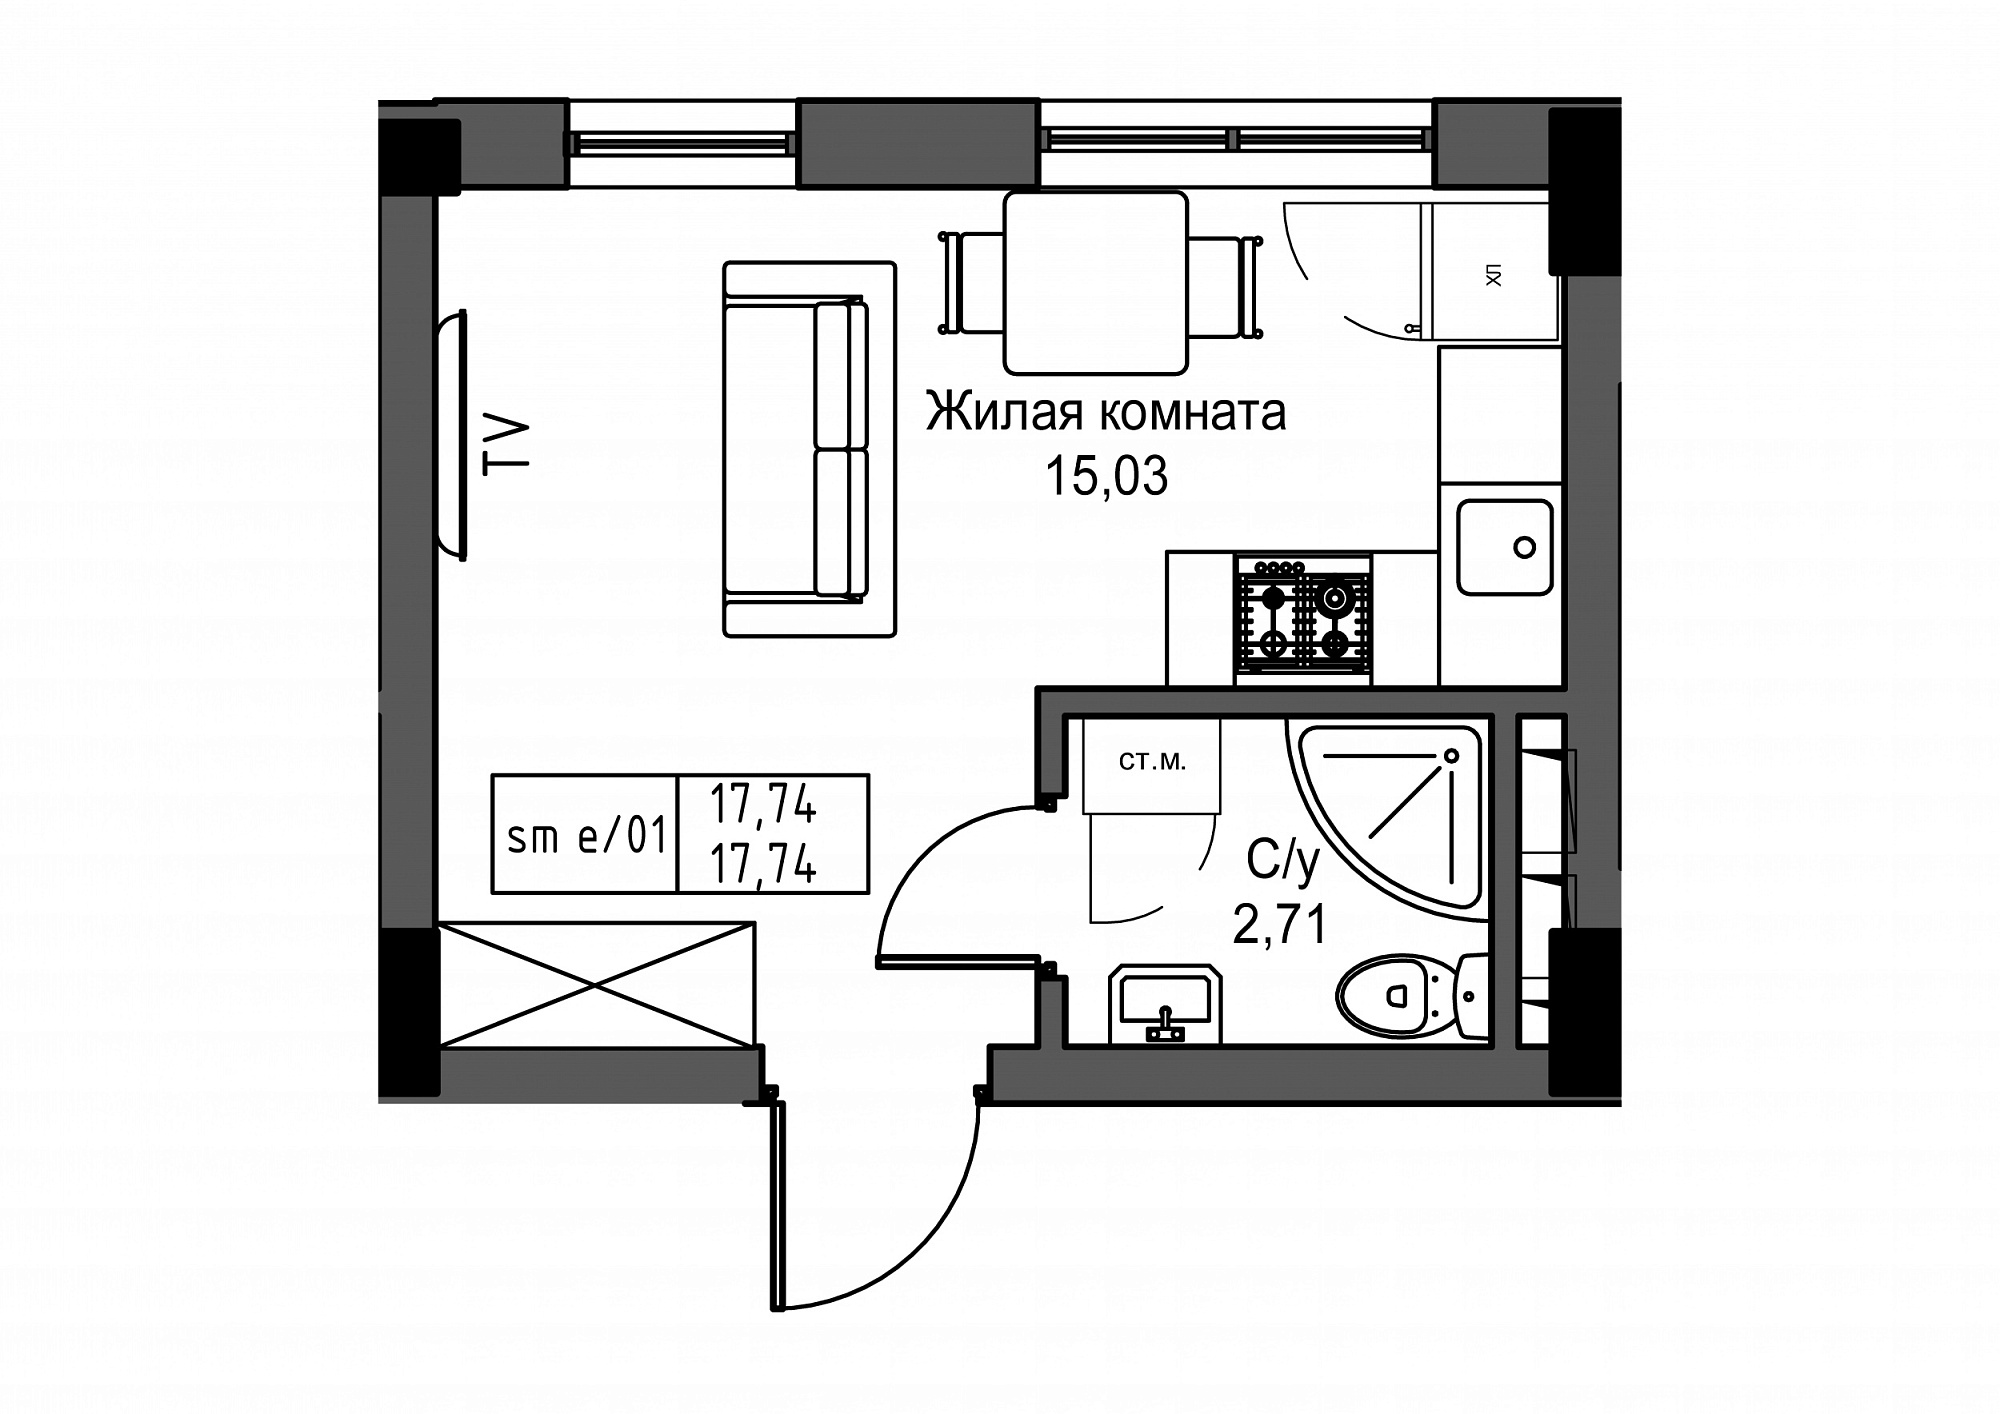 Планування Smart-квартира площею 17.74м2, UM-003-02/0015.